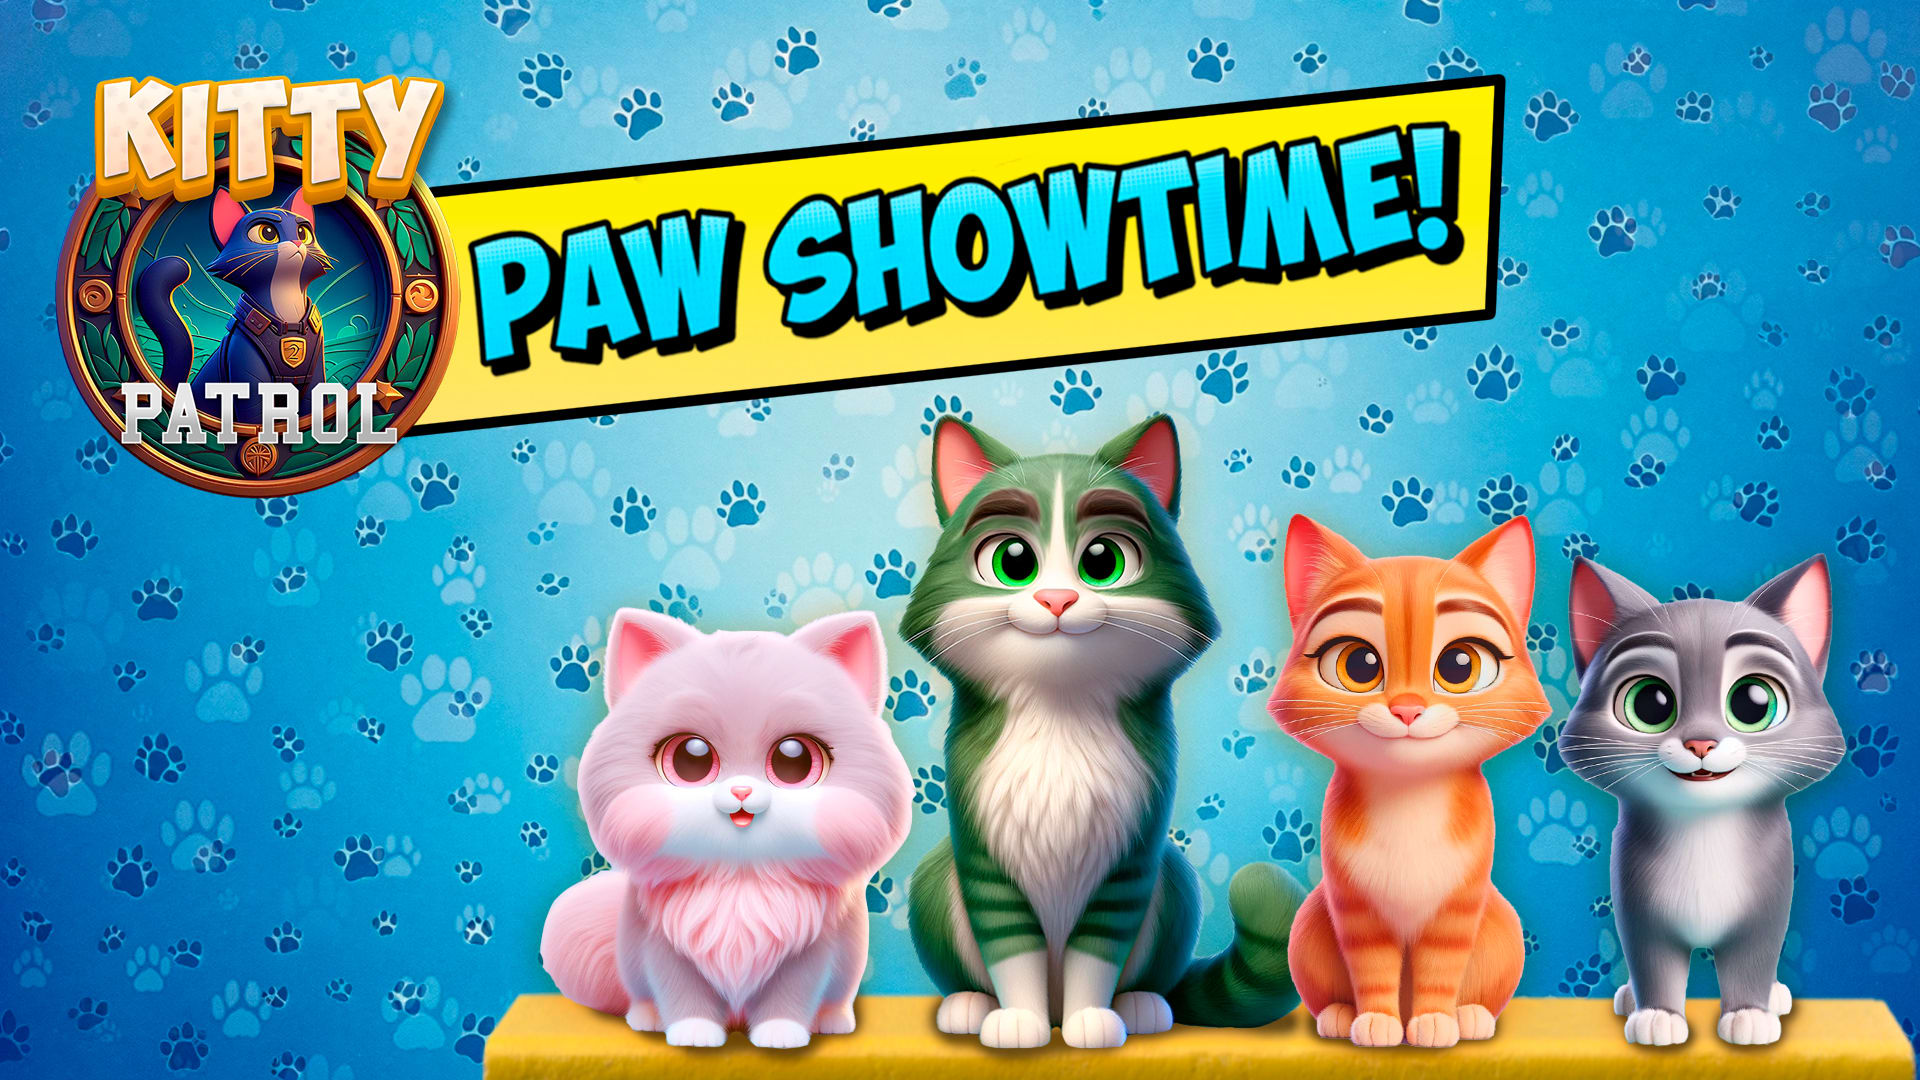 Kitty Patrol: Paw Showtime 1